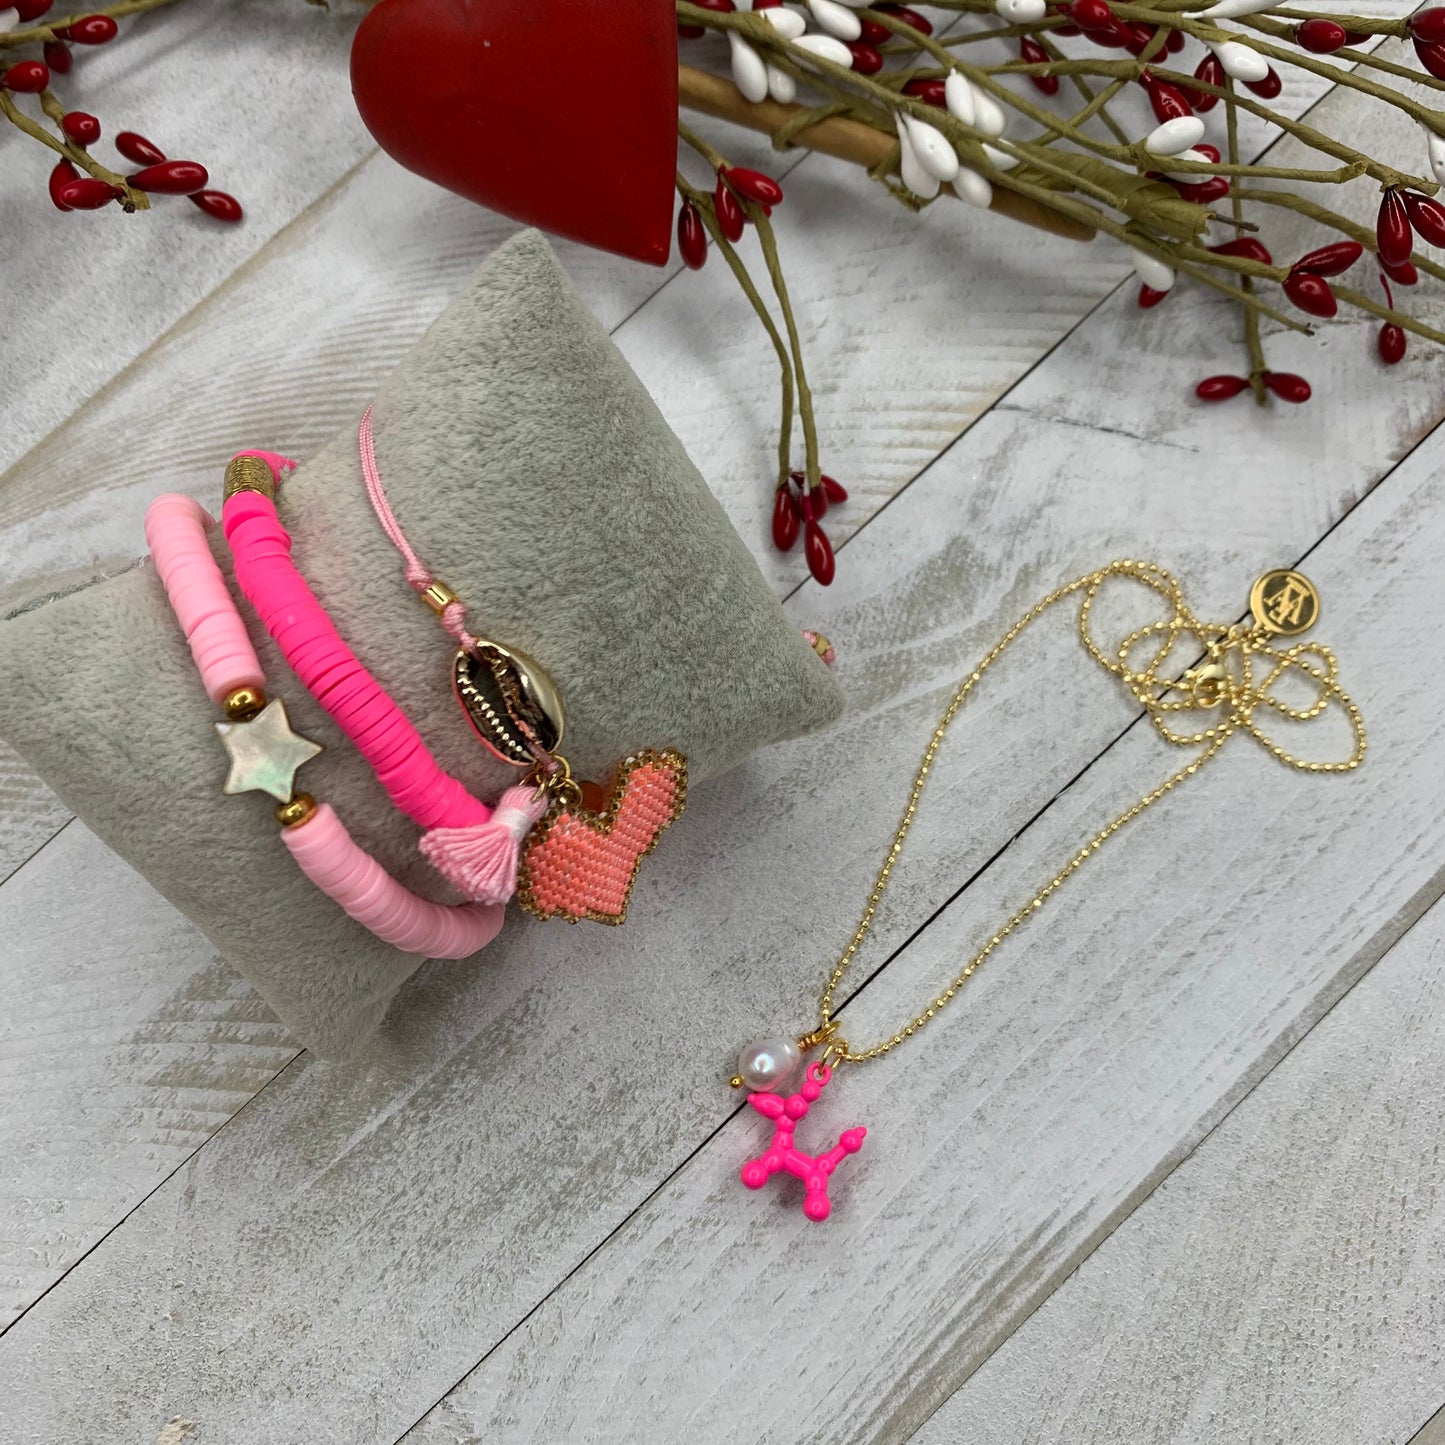 Erika Williner Designs - Koons Ballon Dog Necklace